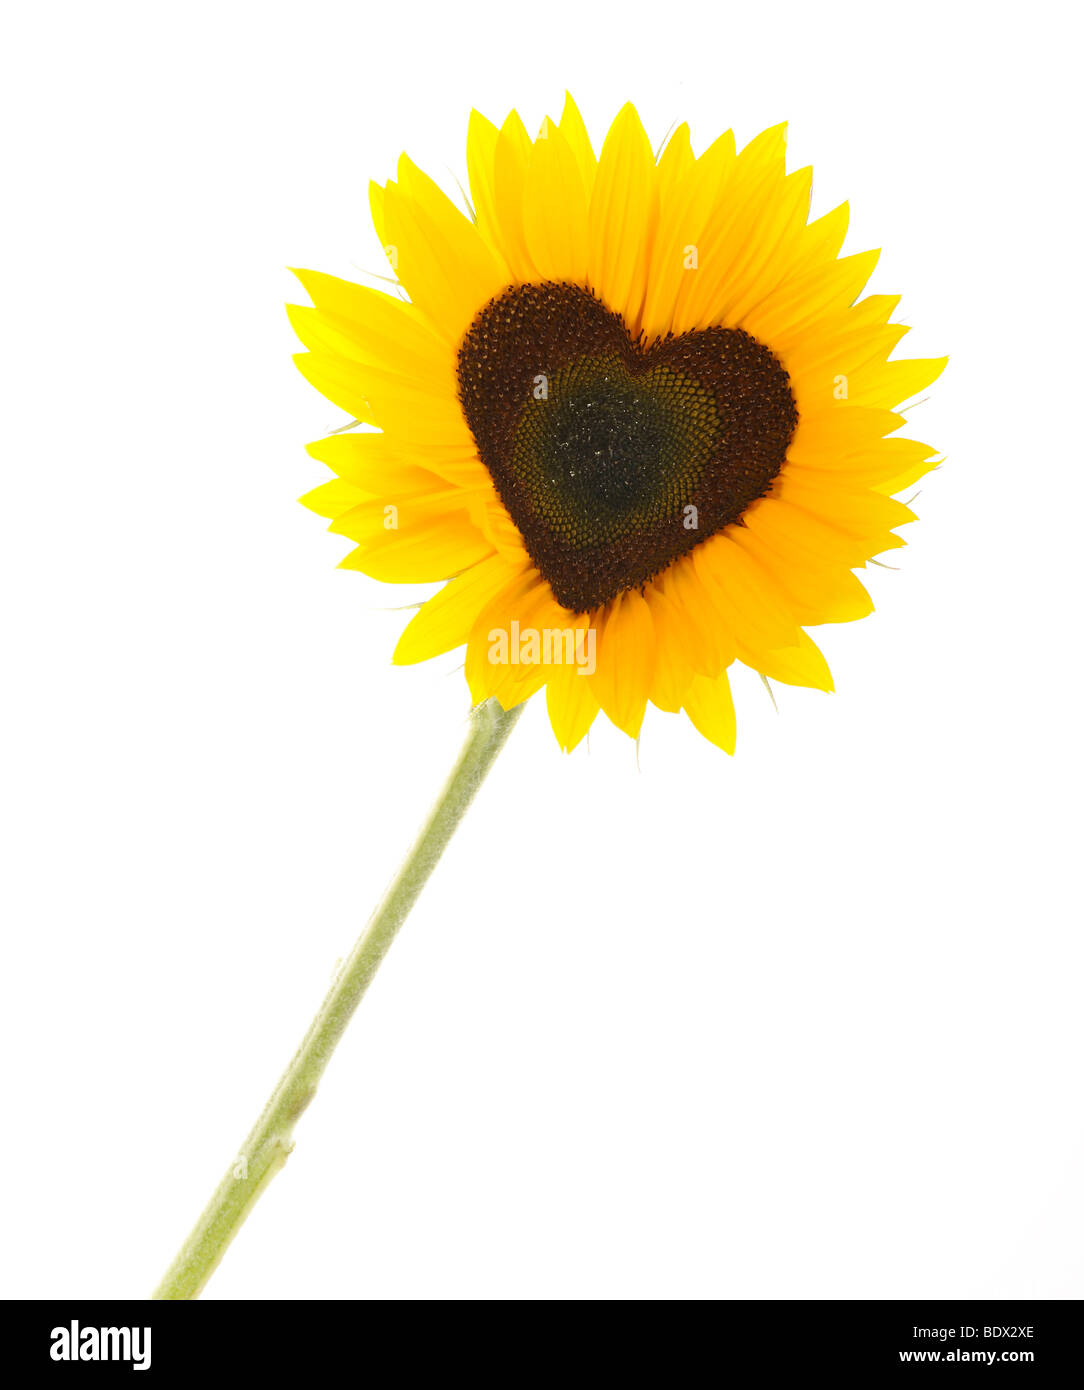 Sonnenblume (Helianthus Annuus) mit röhrenförmigen Blüten in Herzform Stockfoto